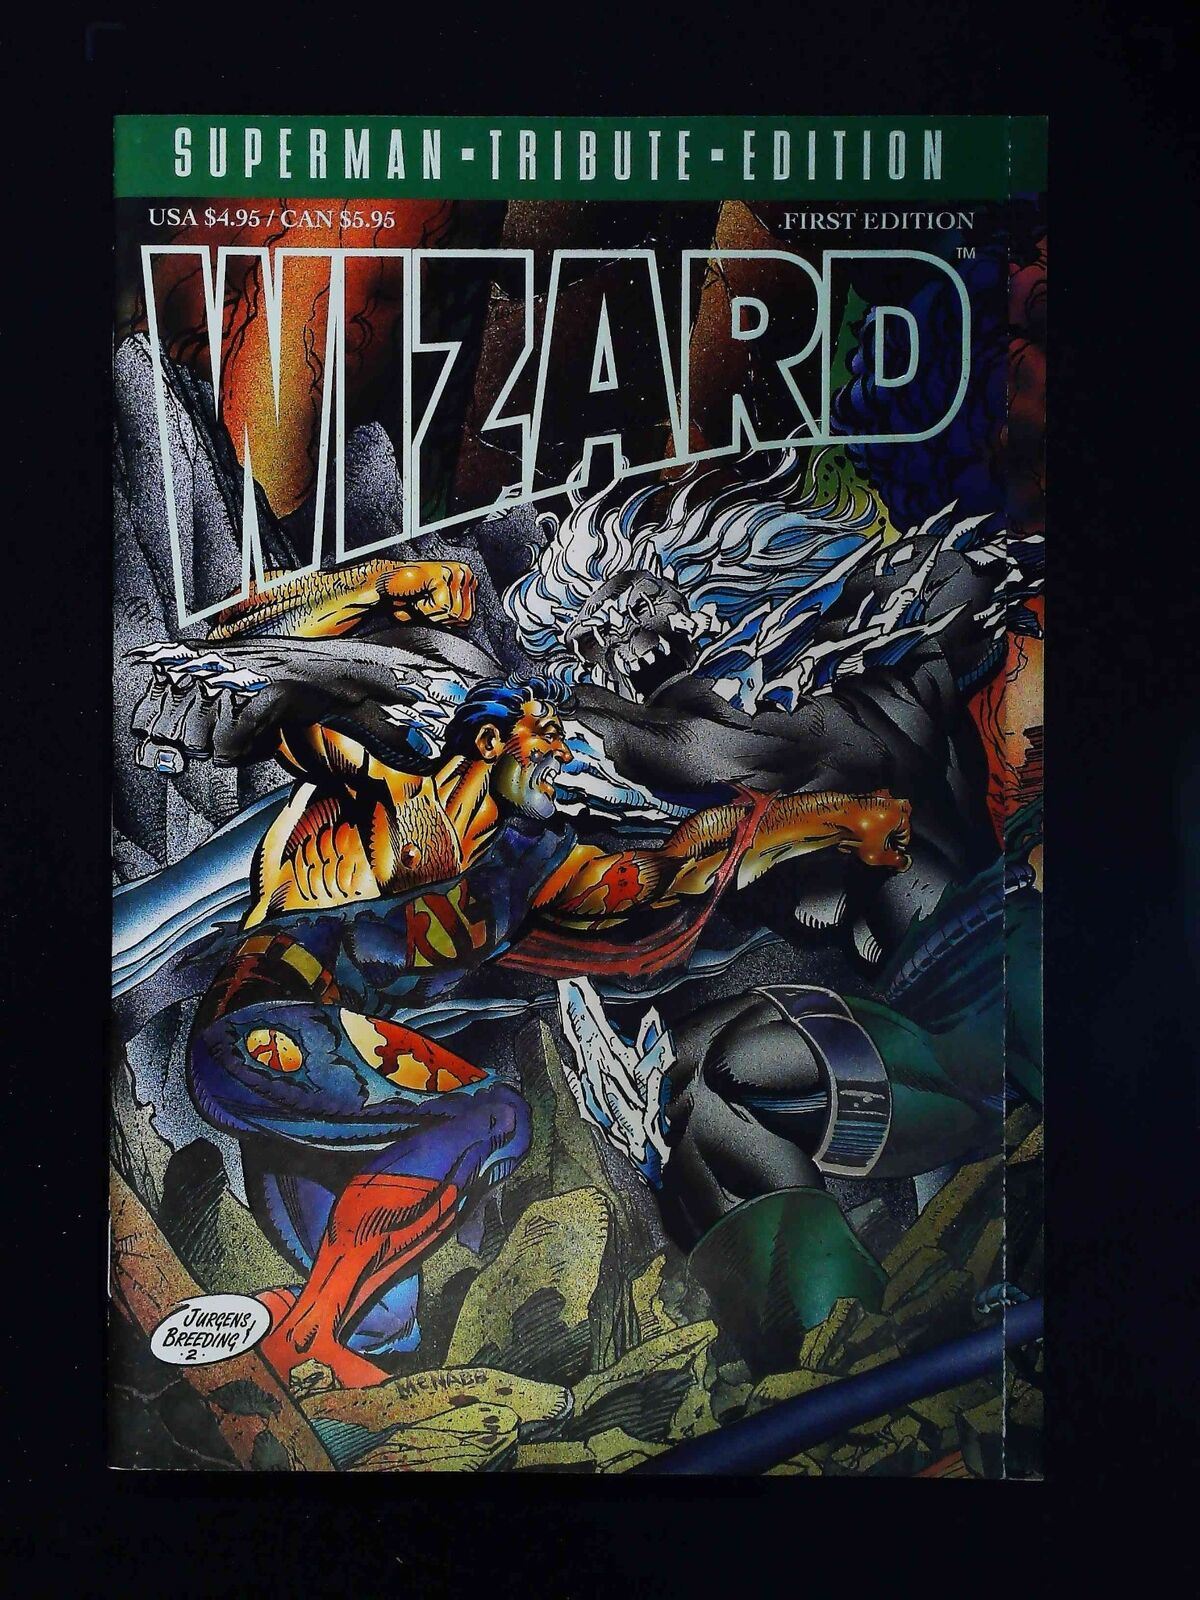 Wizard Superman Tribute  Edition #1U  Wizard Comics 1993 Nm-  Variant Cover